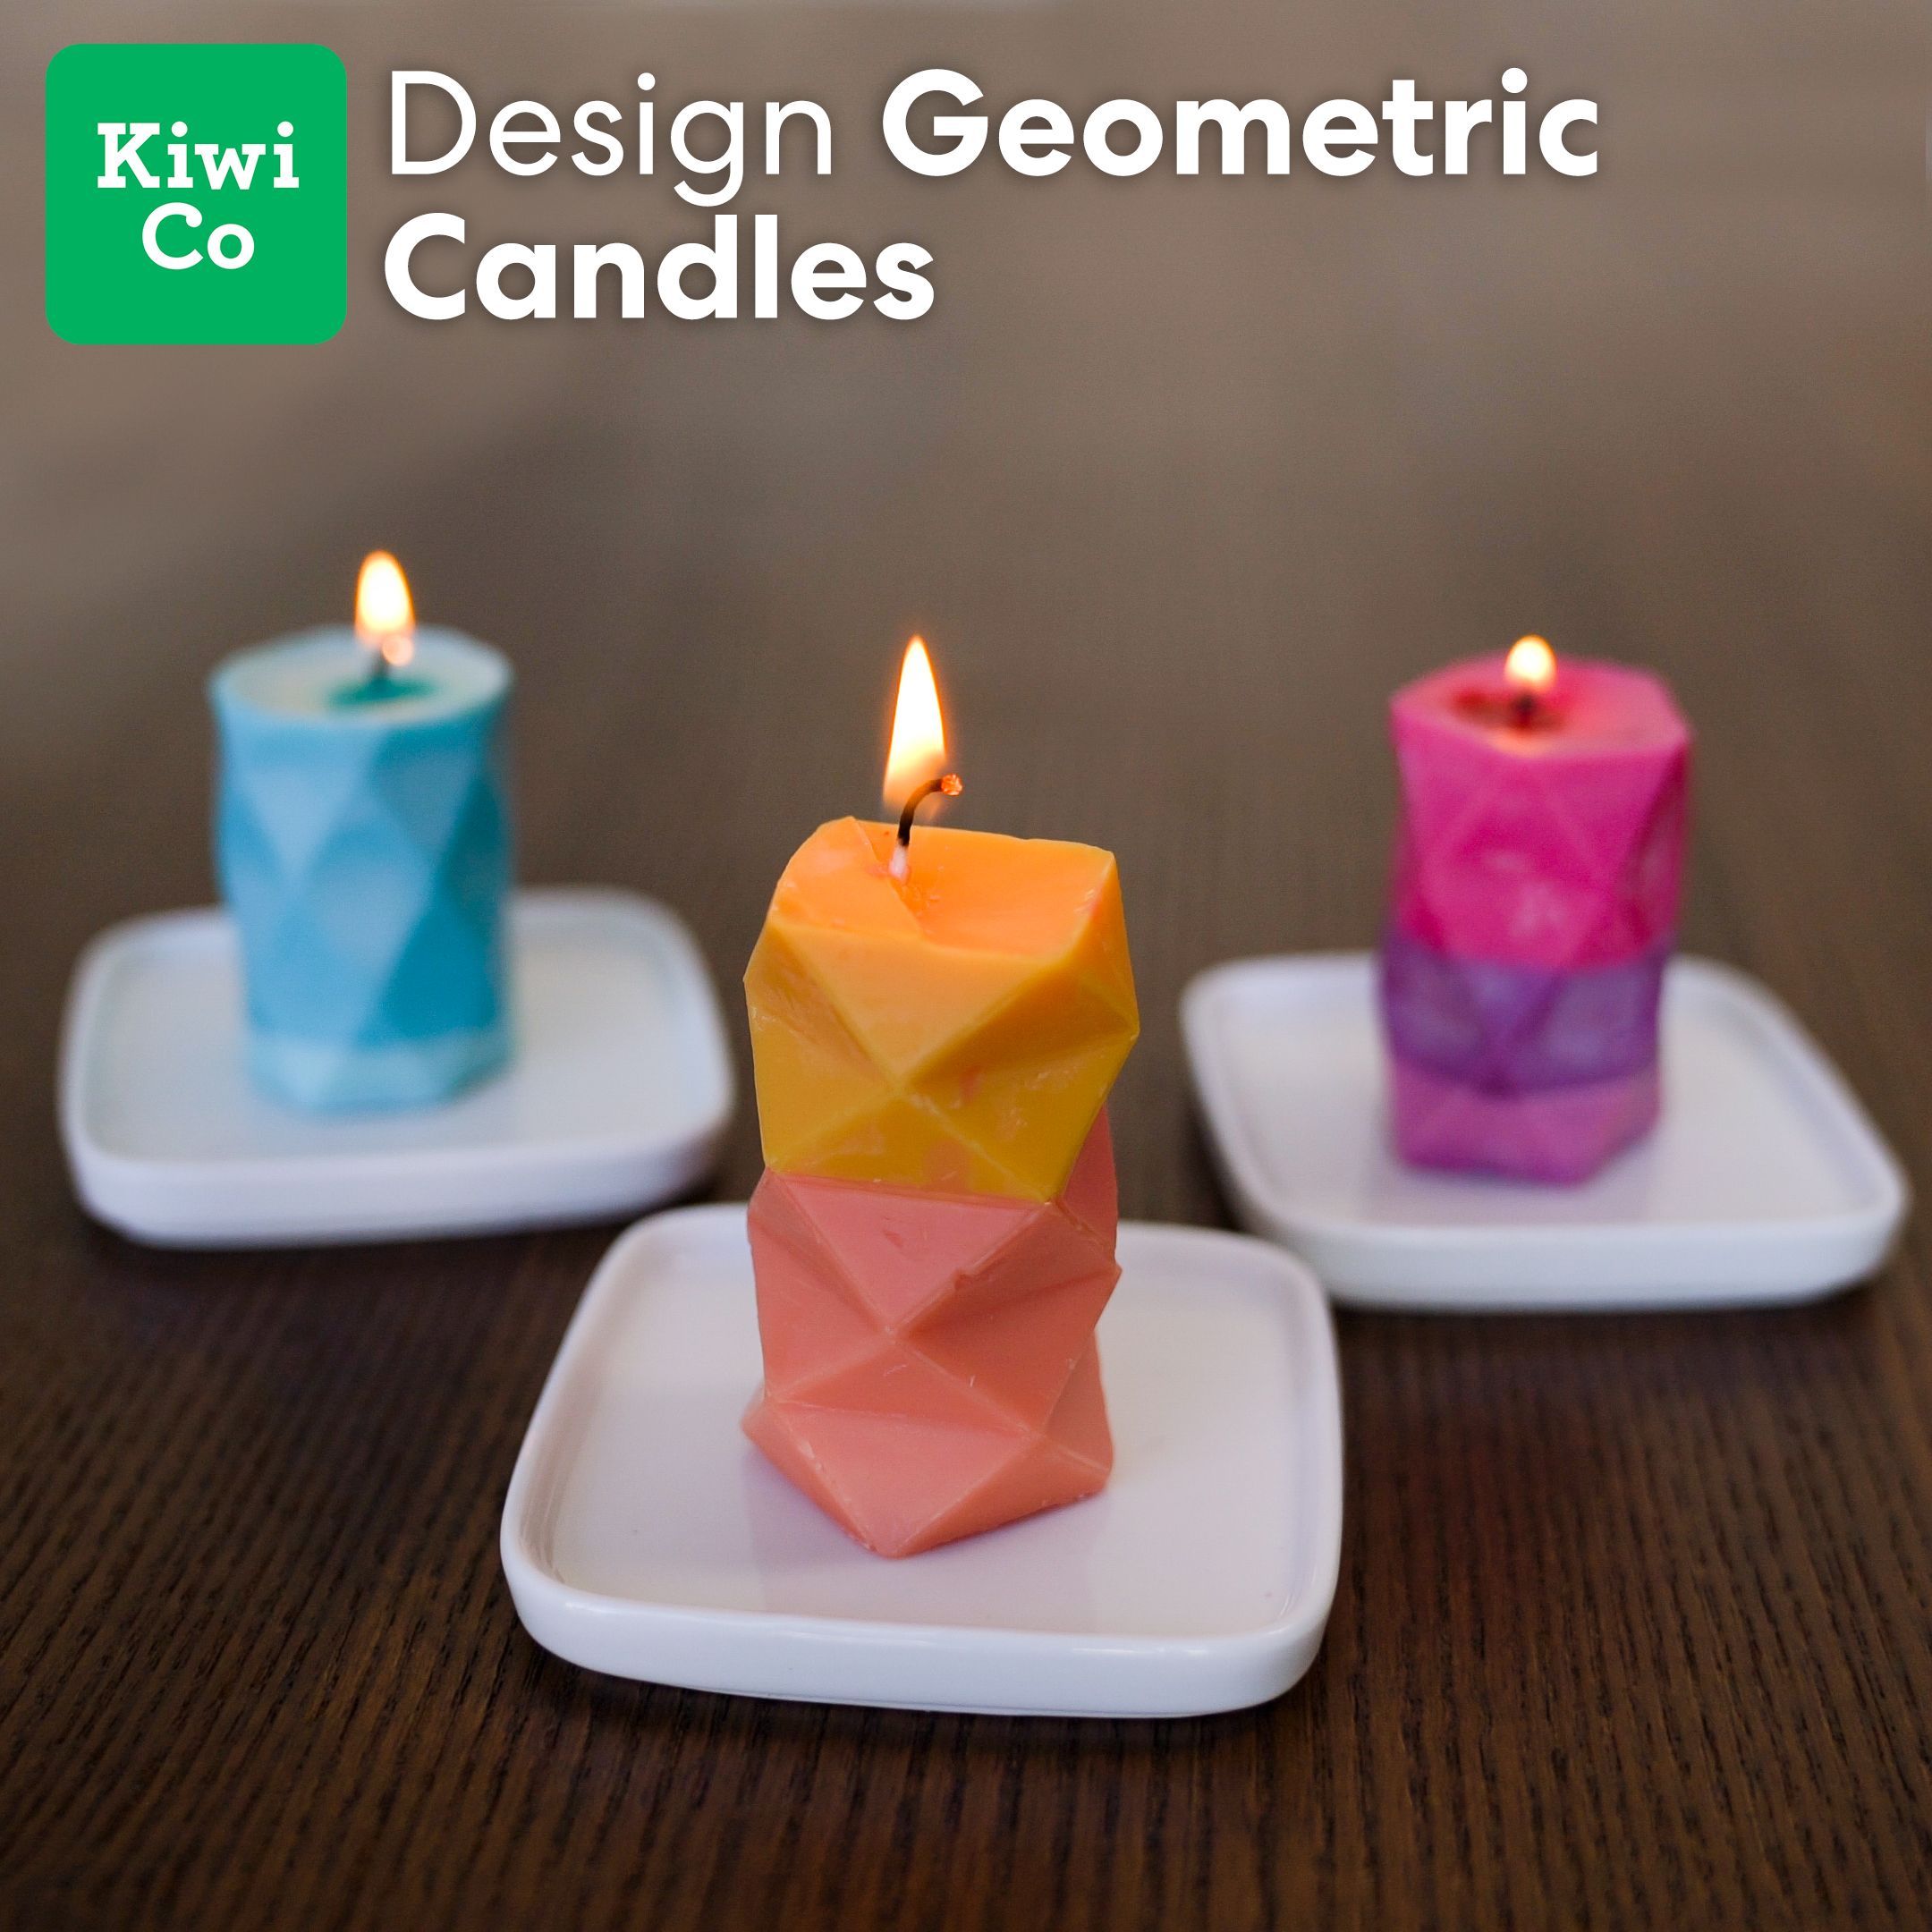 17 diy Candles design ideas